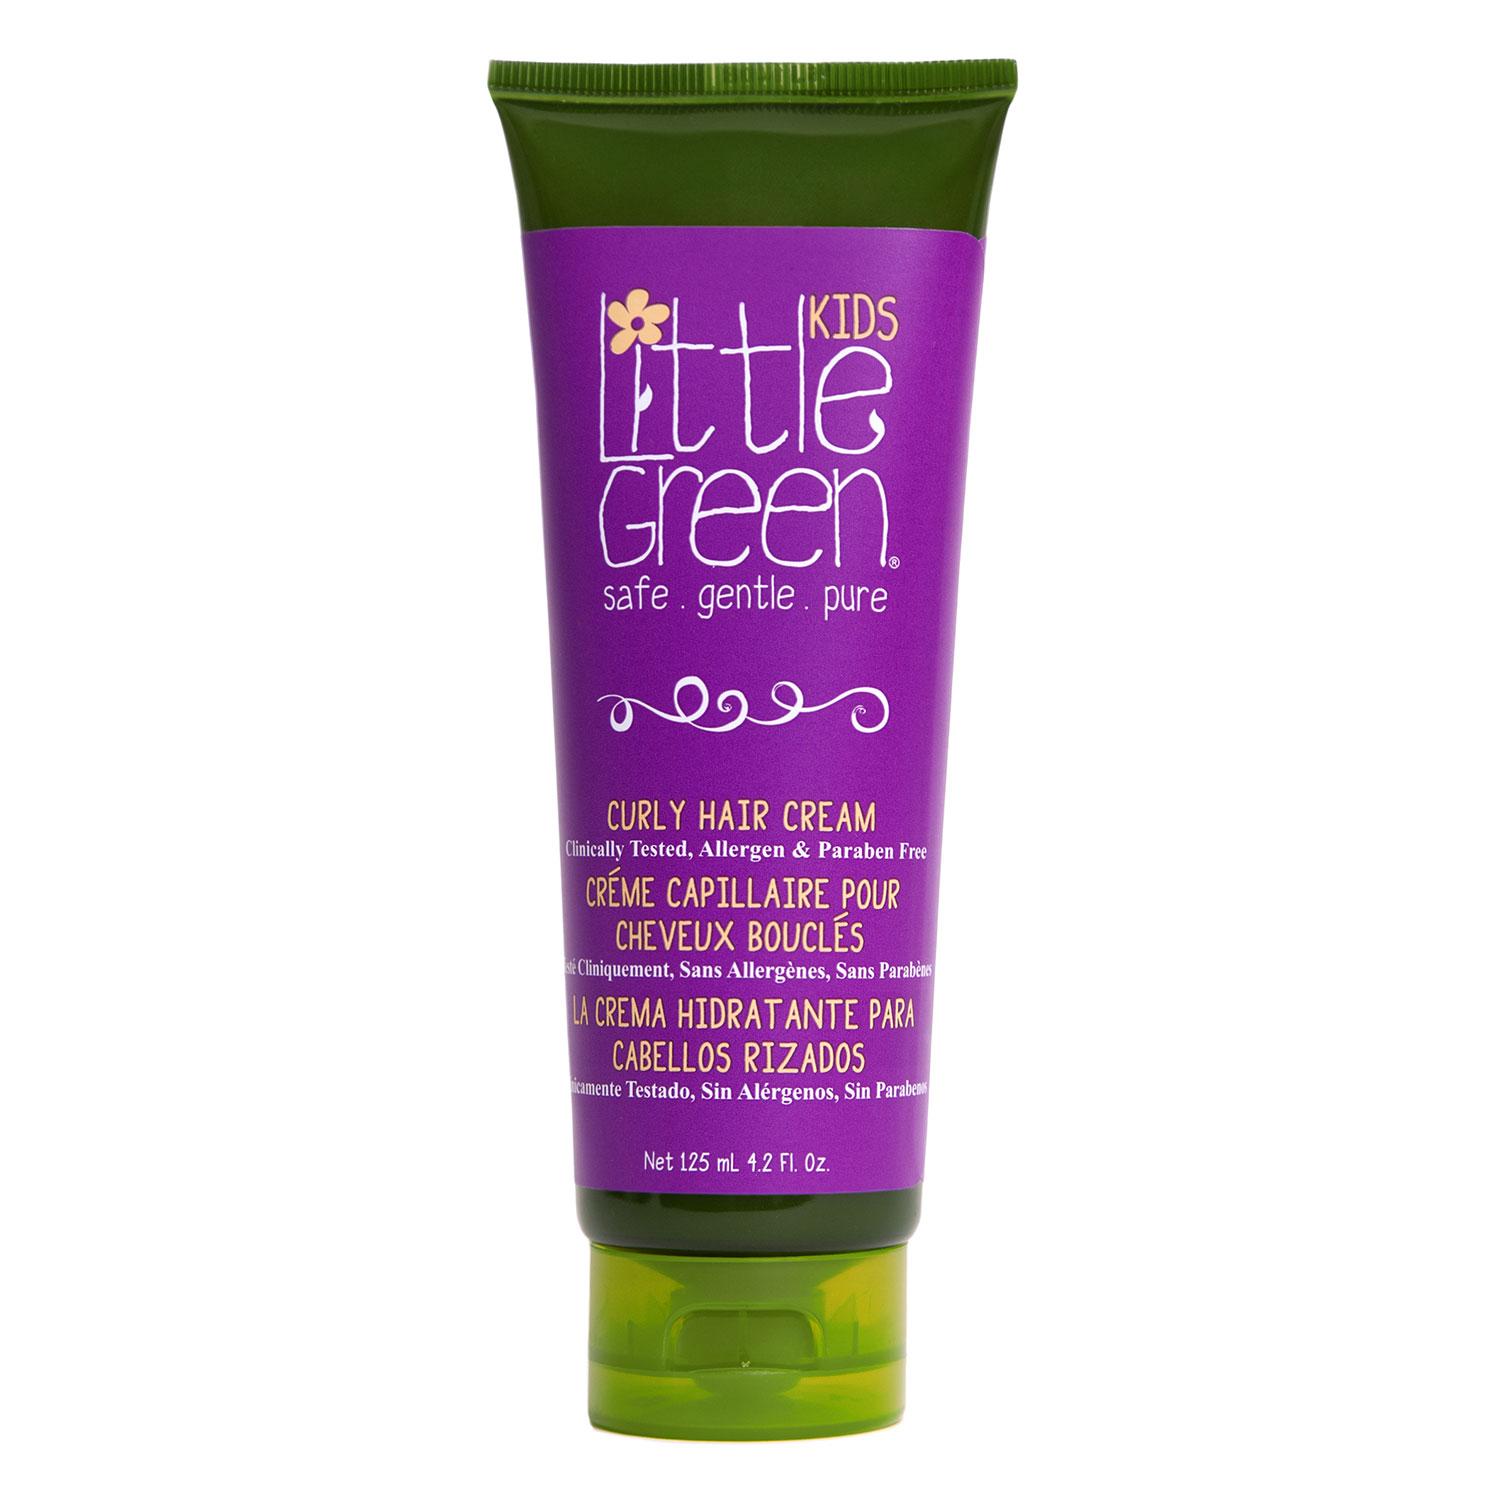 Little Green Kids - Curly Hair Cream